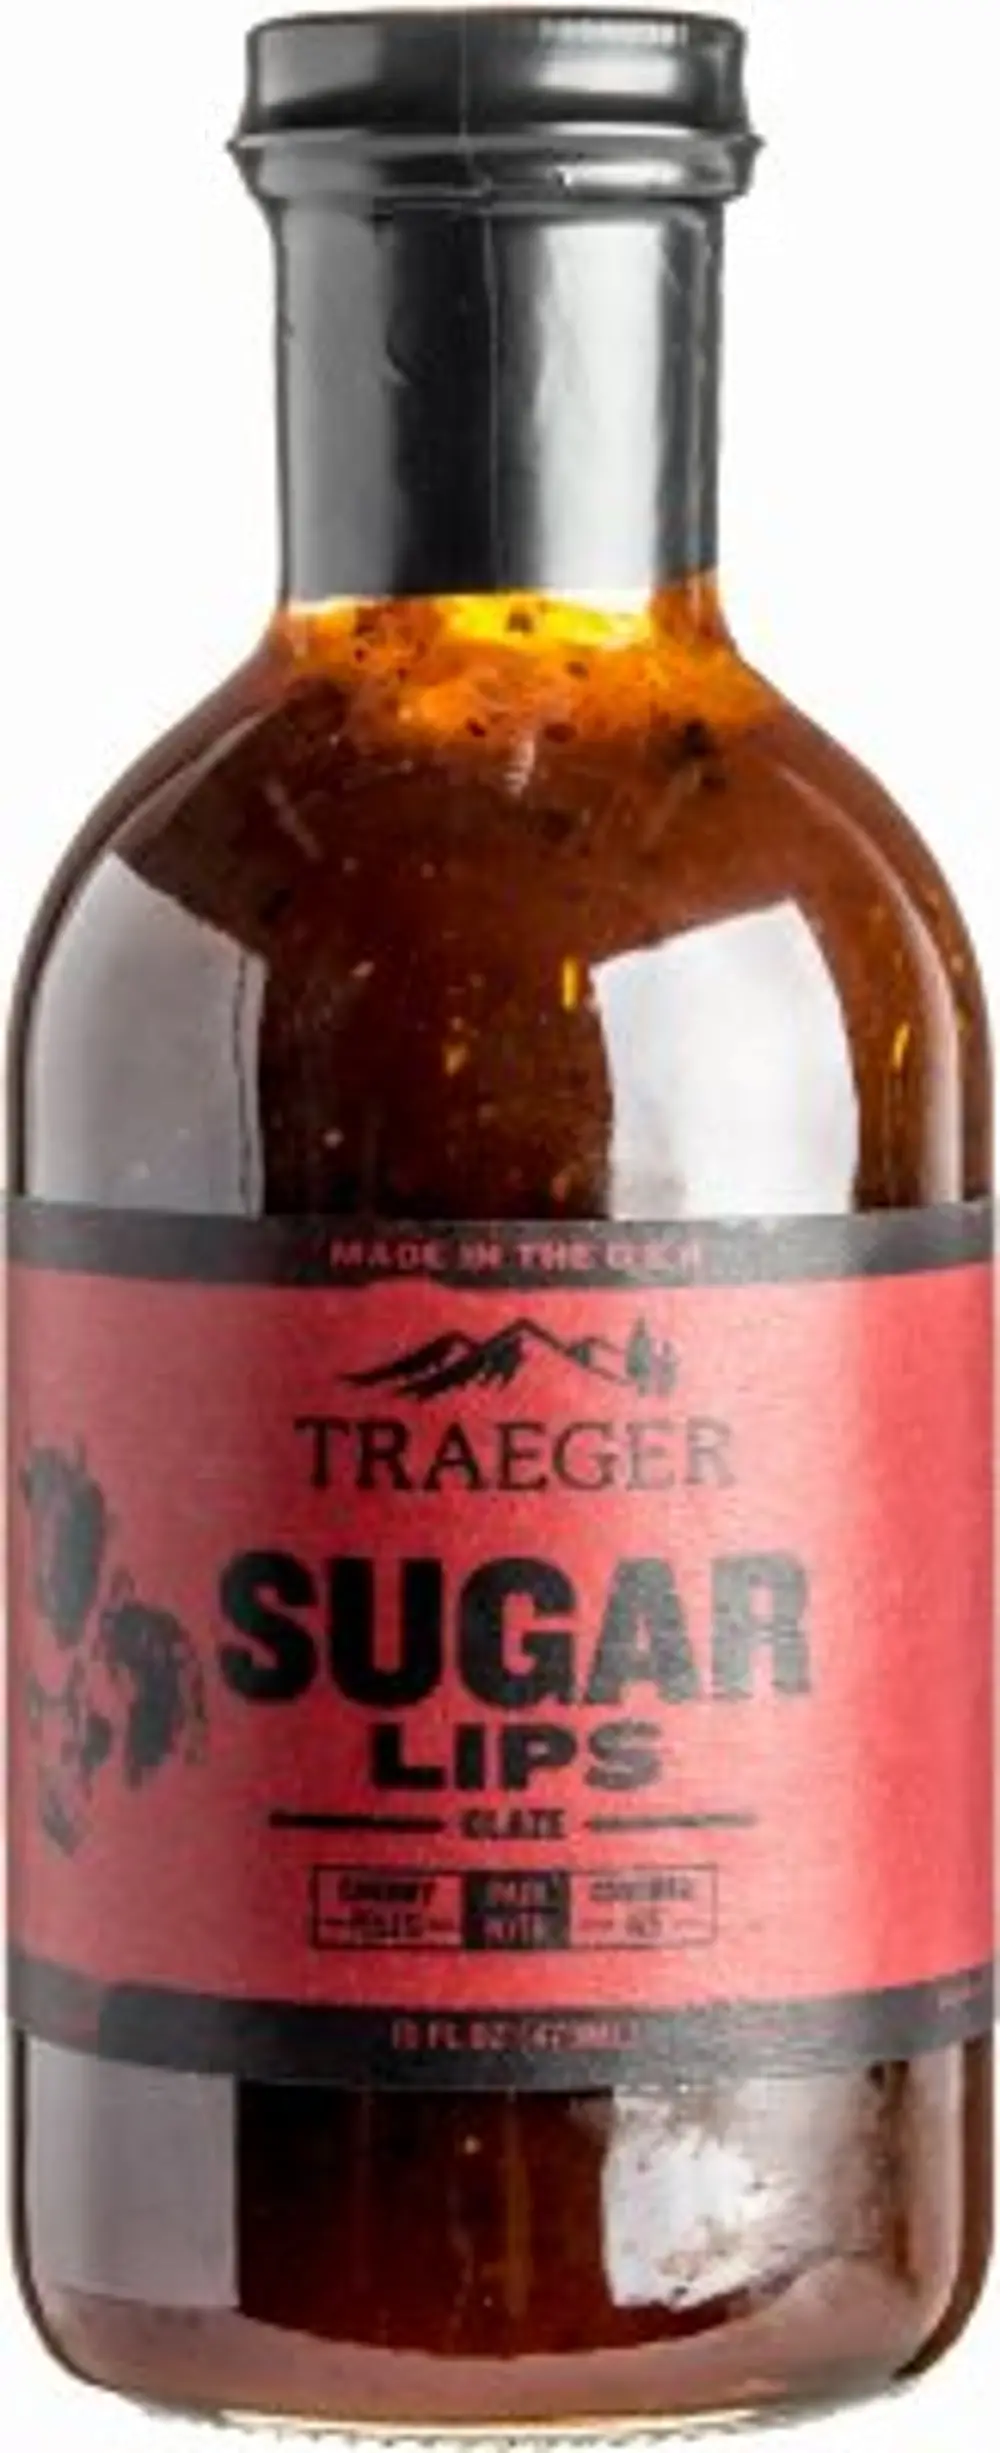 SAU030,SUGAR_LIPS Traeger Grill Sugar Lips BBQ Sauce-1